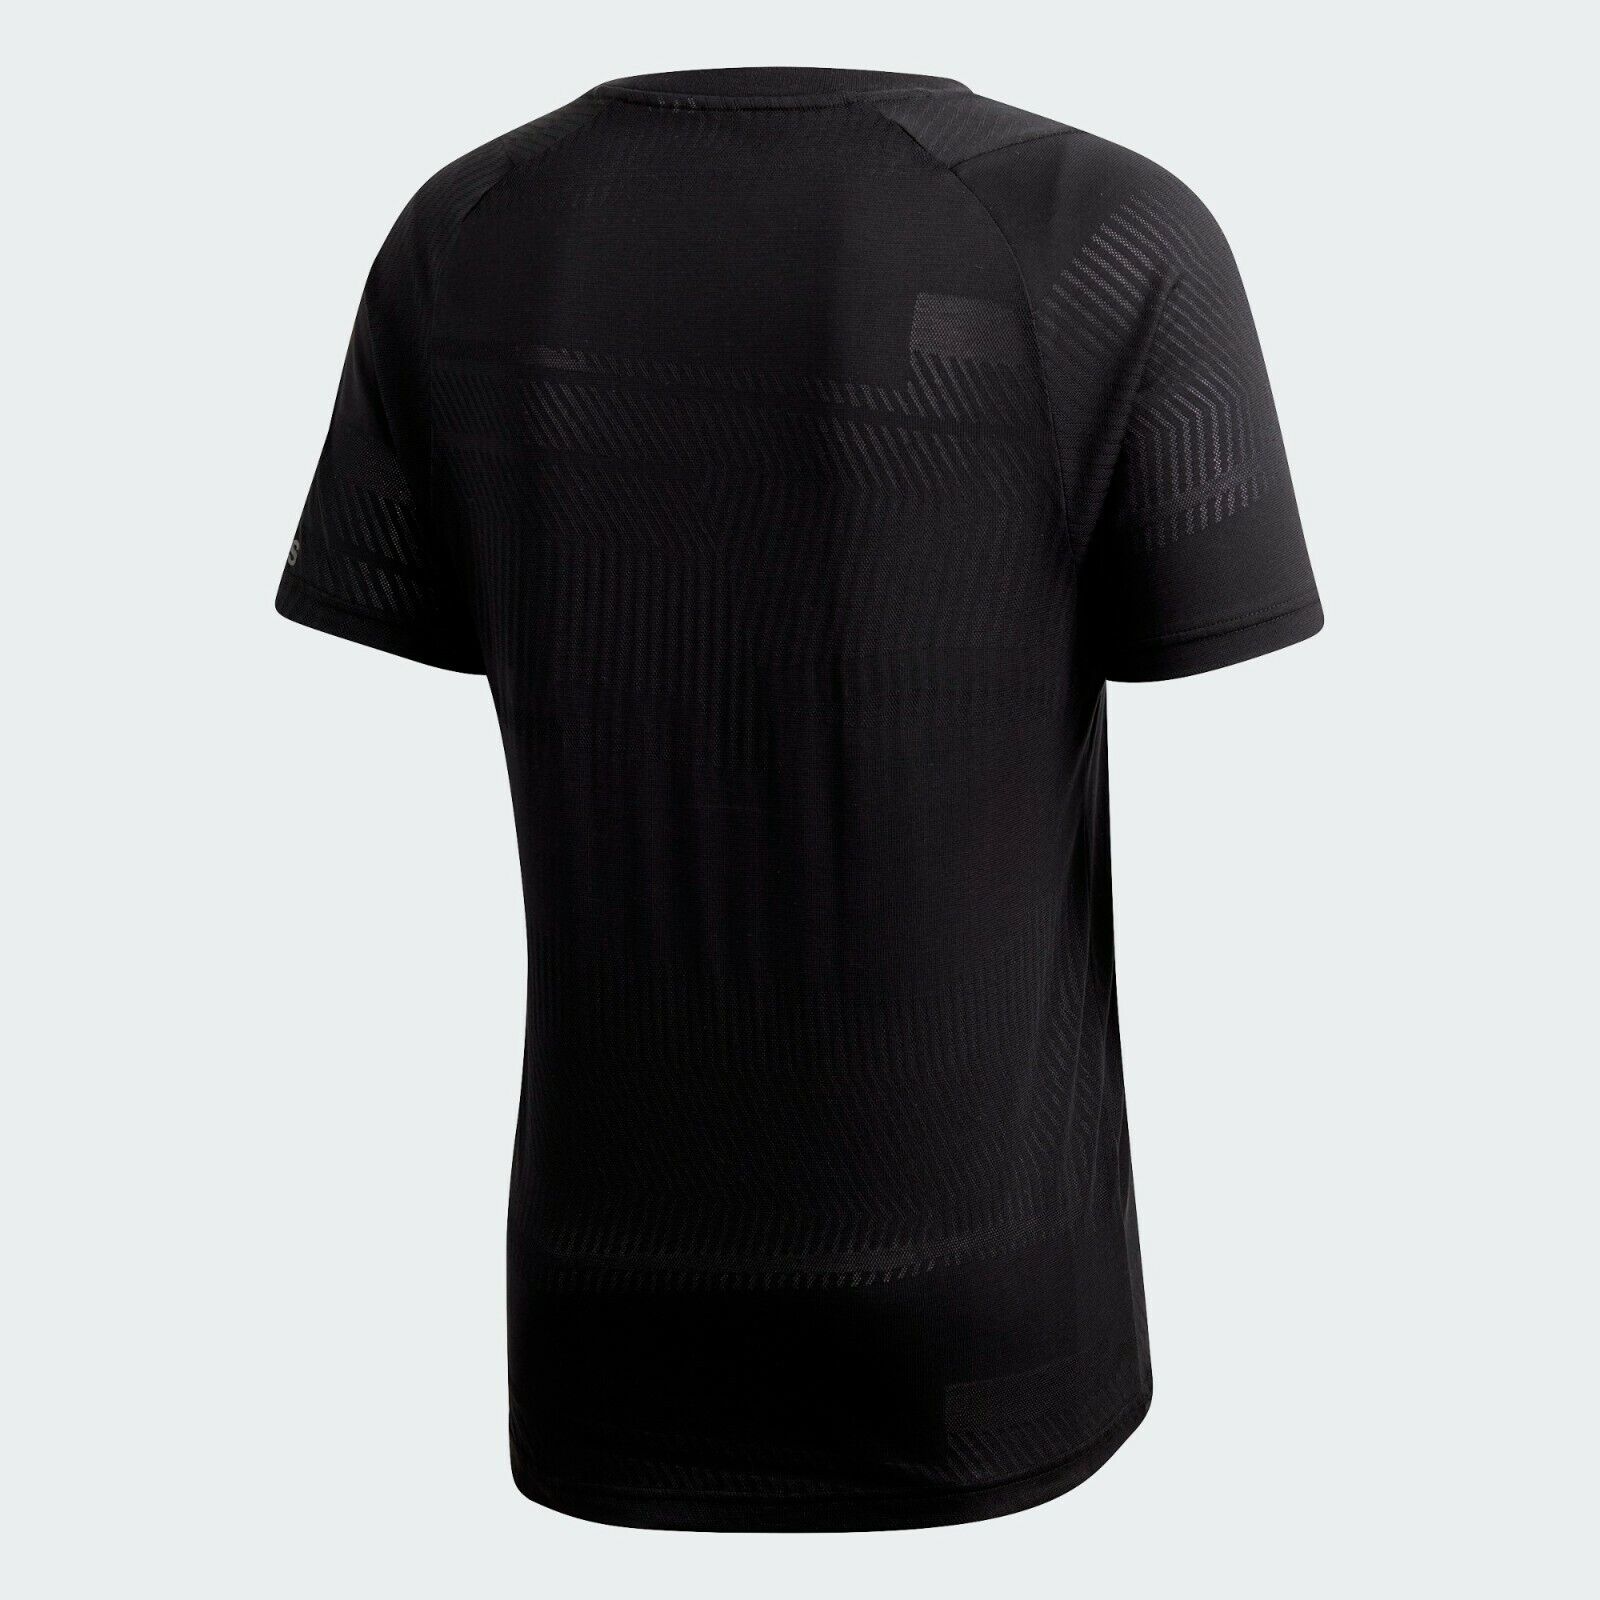 Adidas Men's ID Jacquard T-Shirt